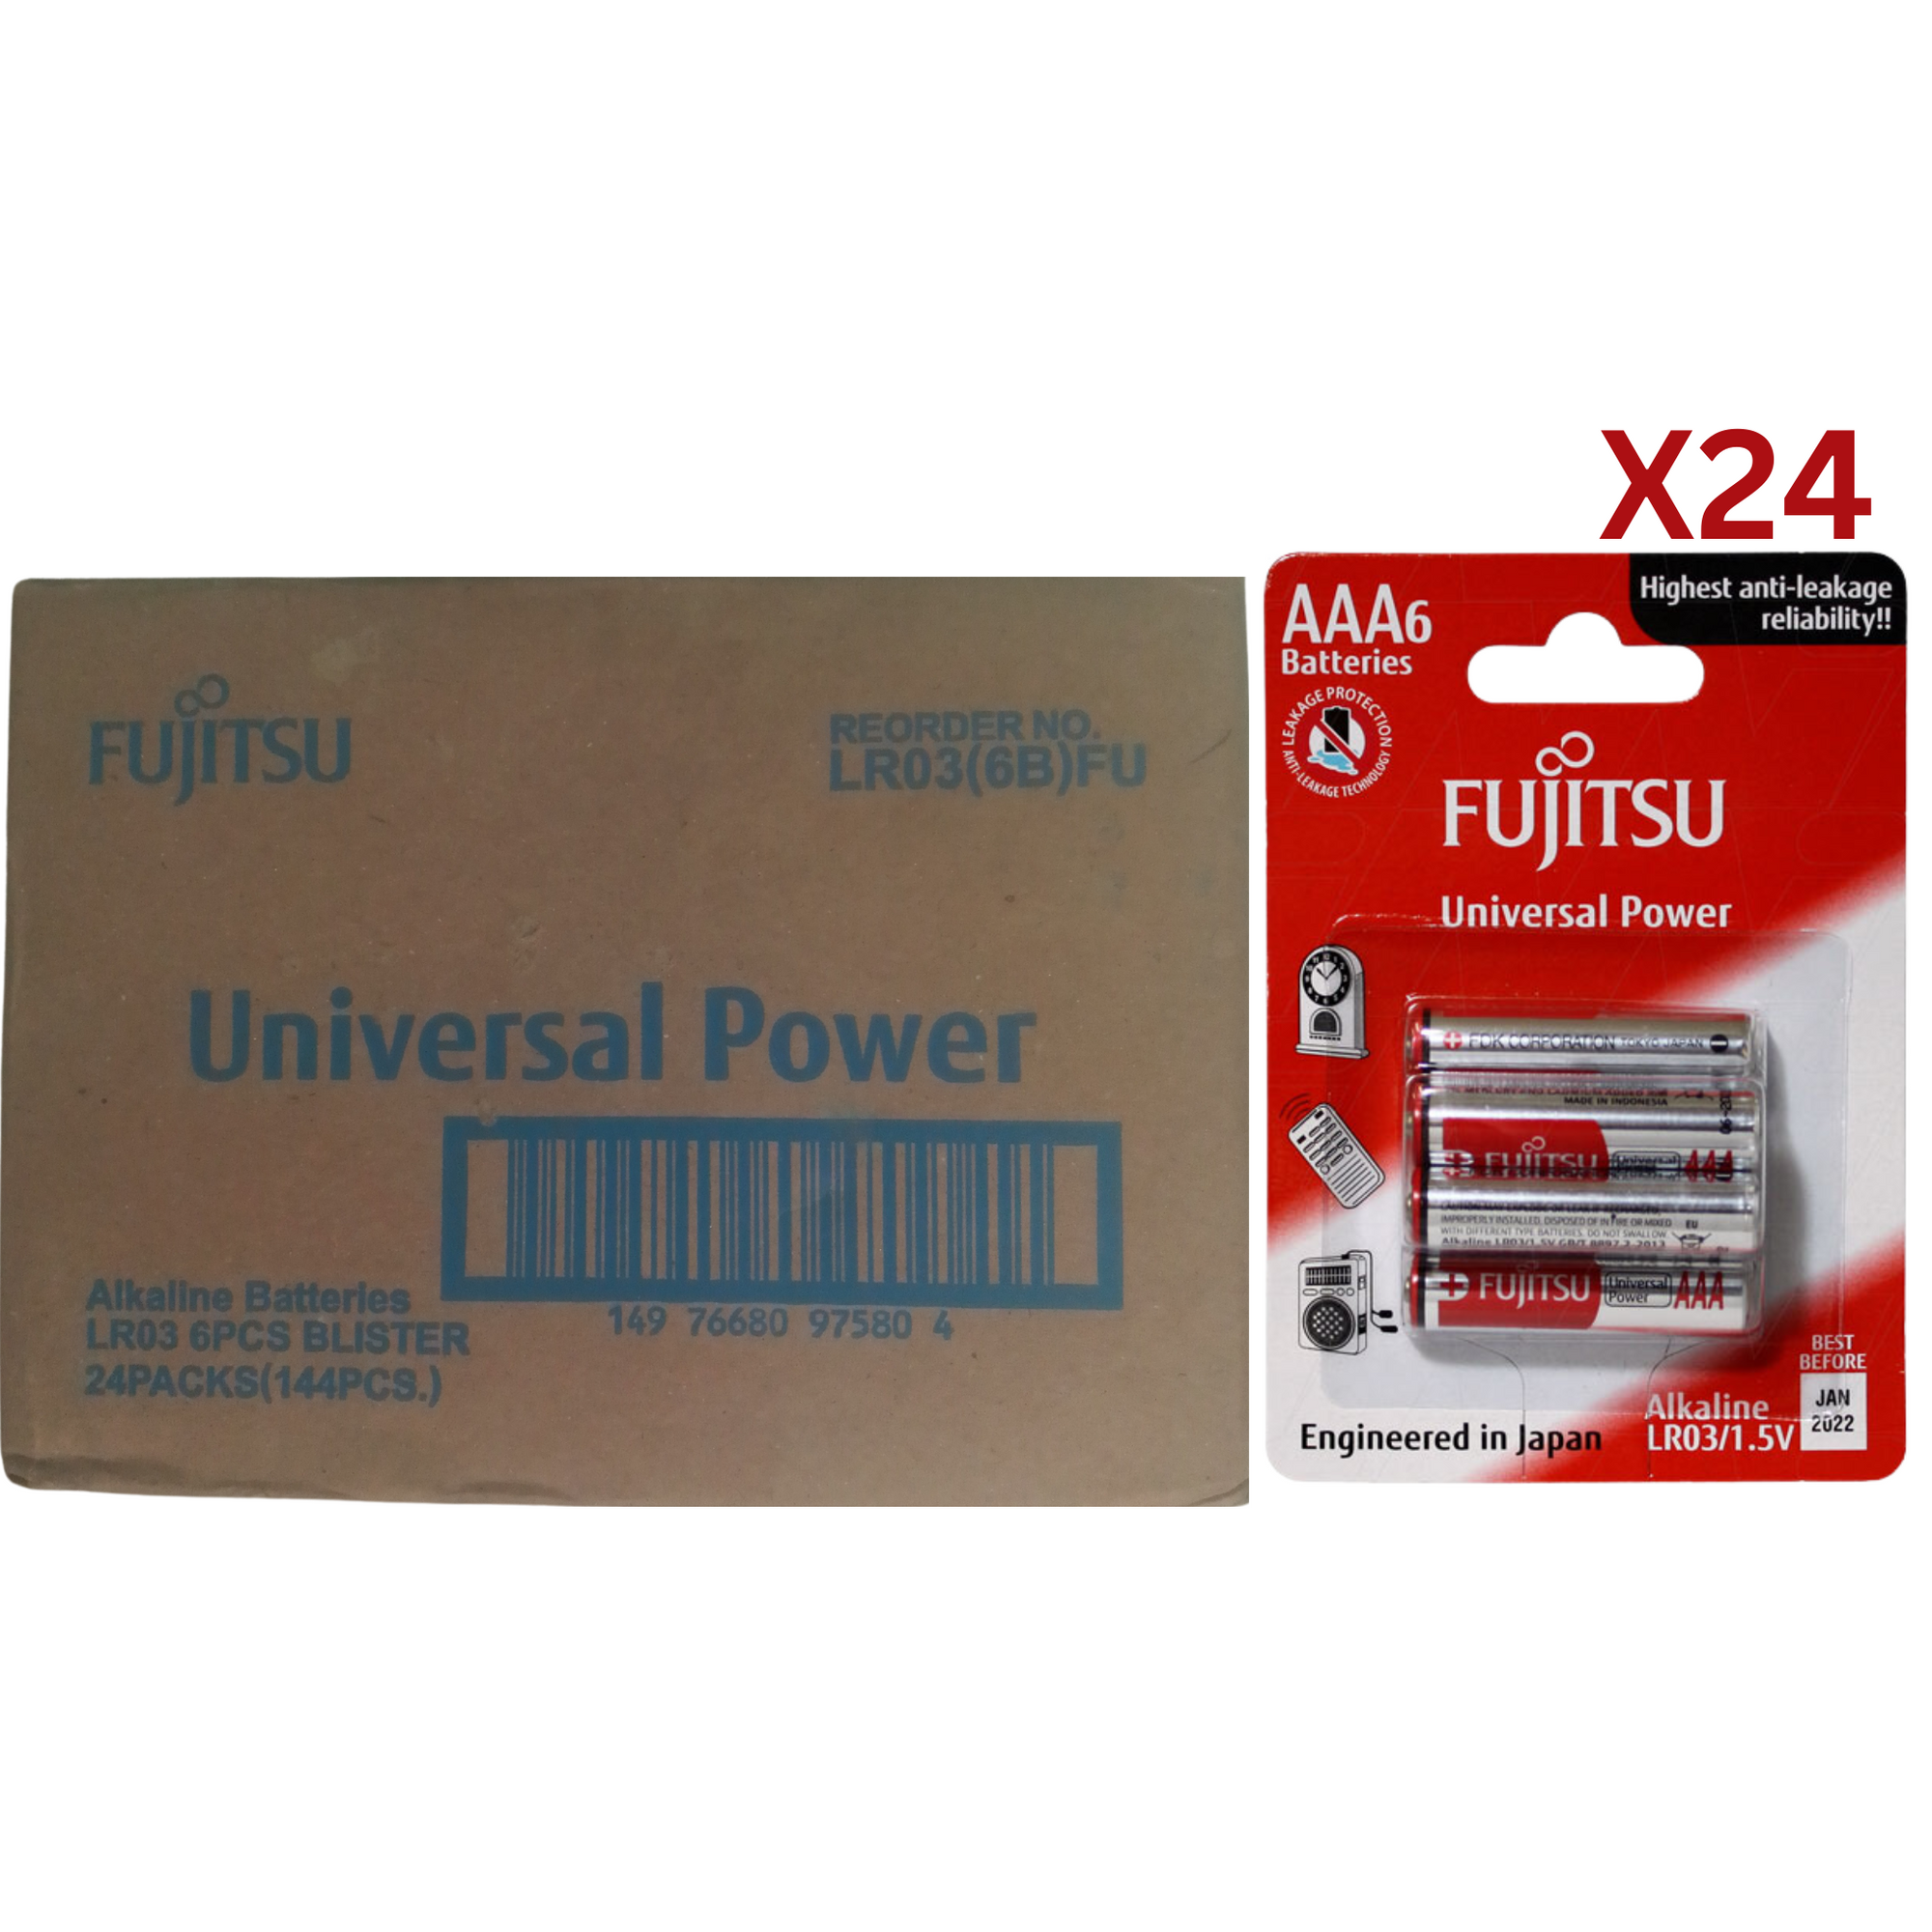 Fujitsu Universal Power AAA6 Alkaline Battery 1.5V, LR03 - Wholesale